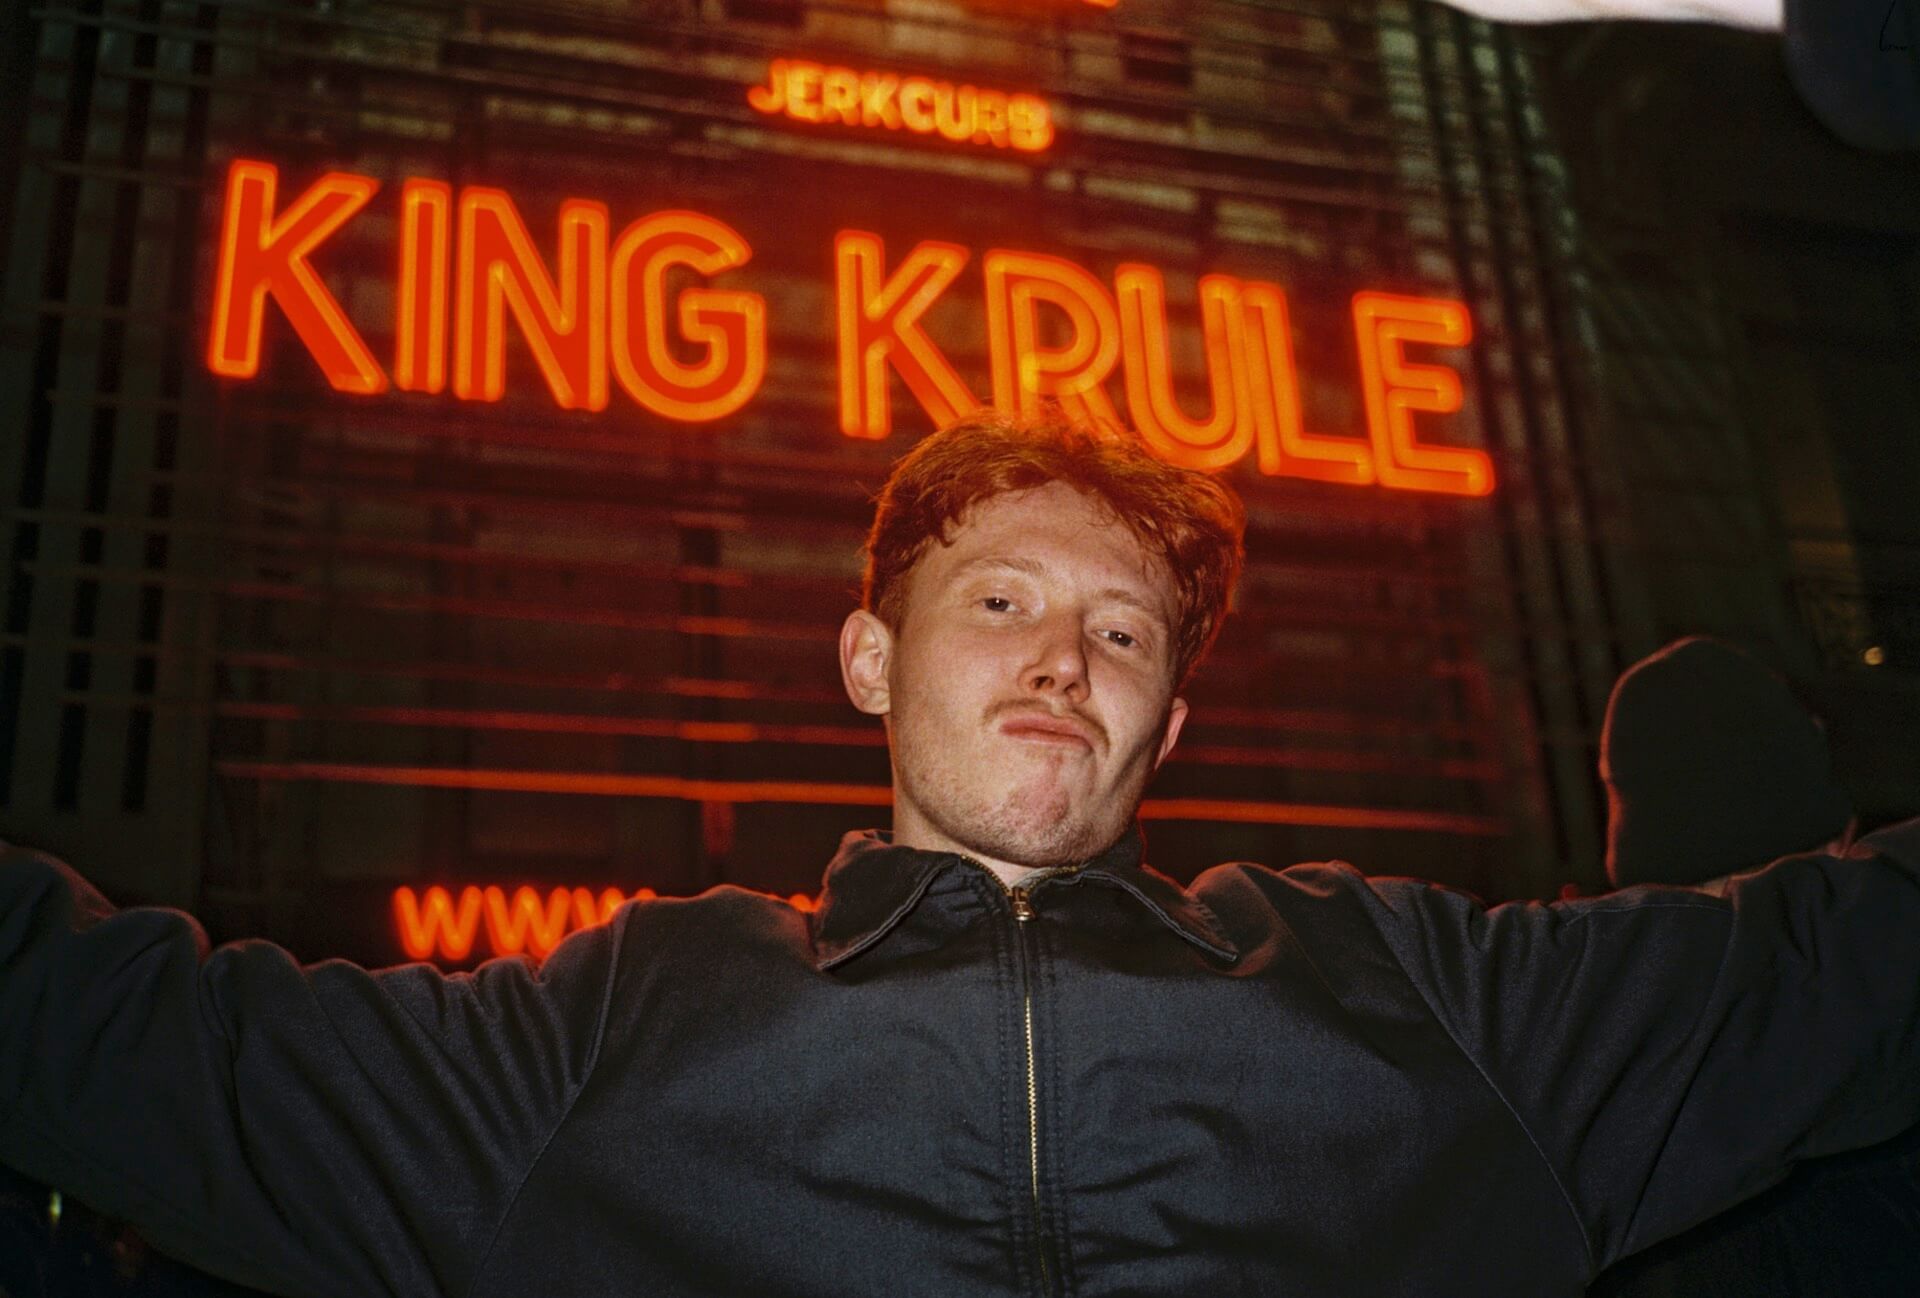 King Kruleのライブアルバム『You Heat Me Up, You Cool Me Down』が配信開始！ツアー中に撮影されたショートフィルムも公開 music210909_kk_shortfilm_2